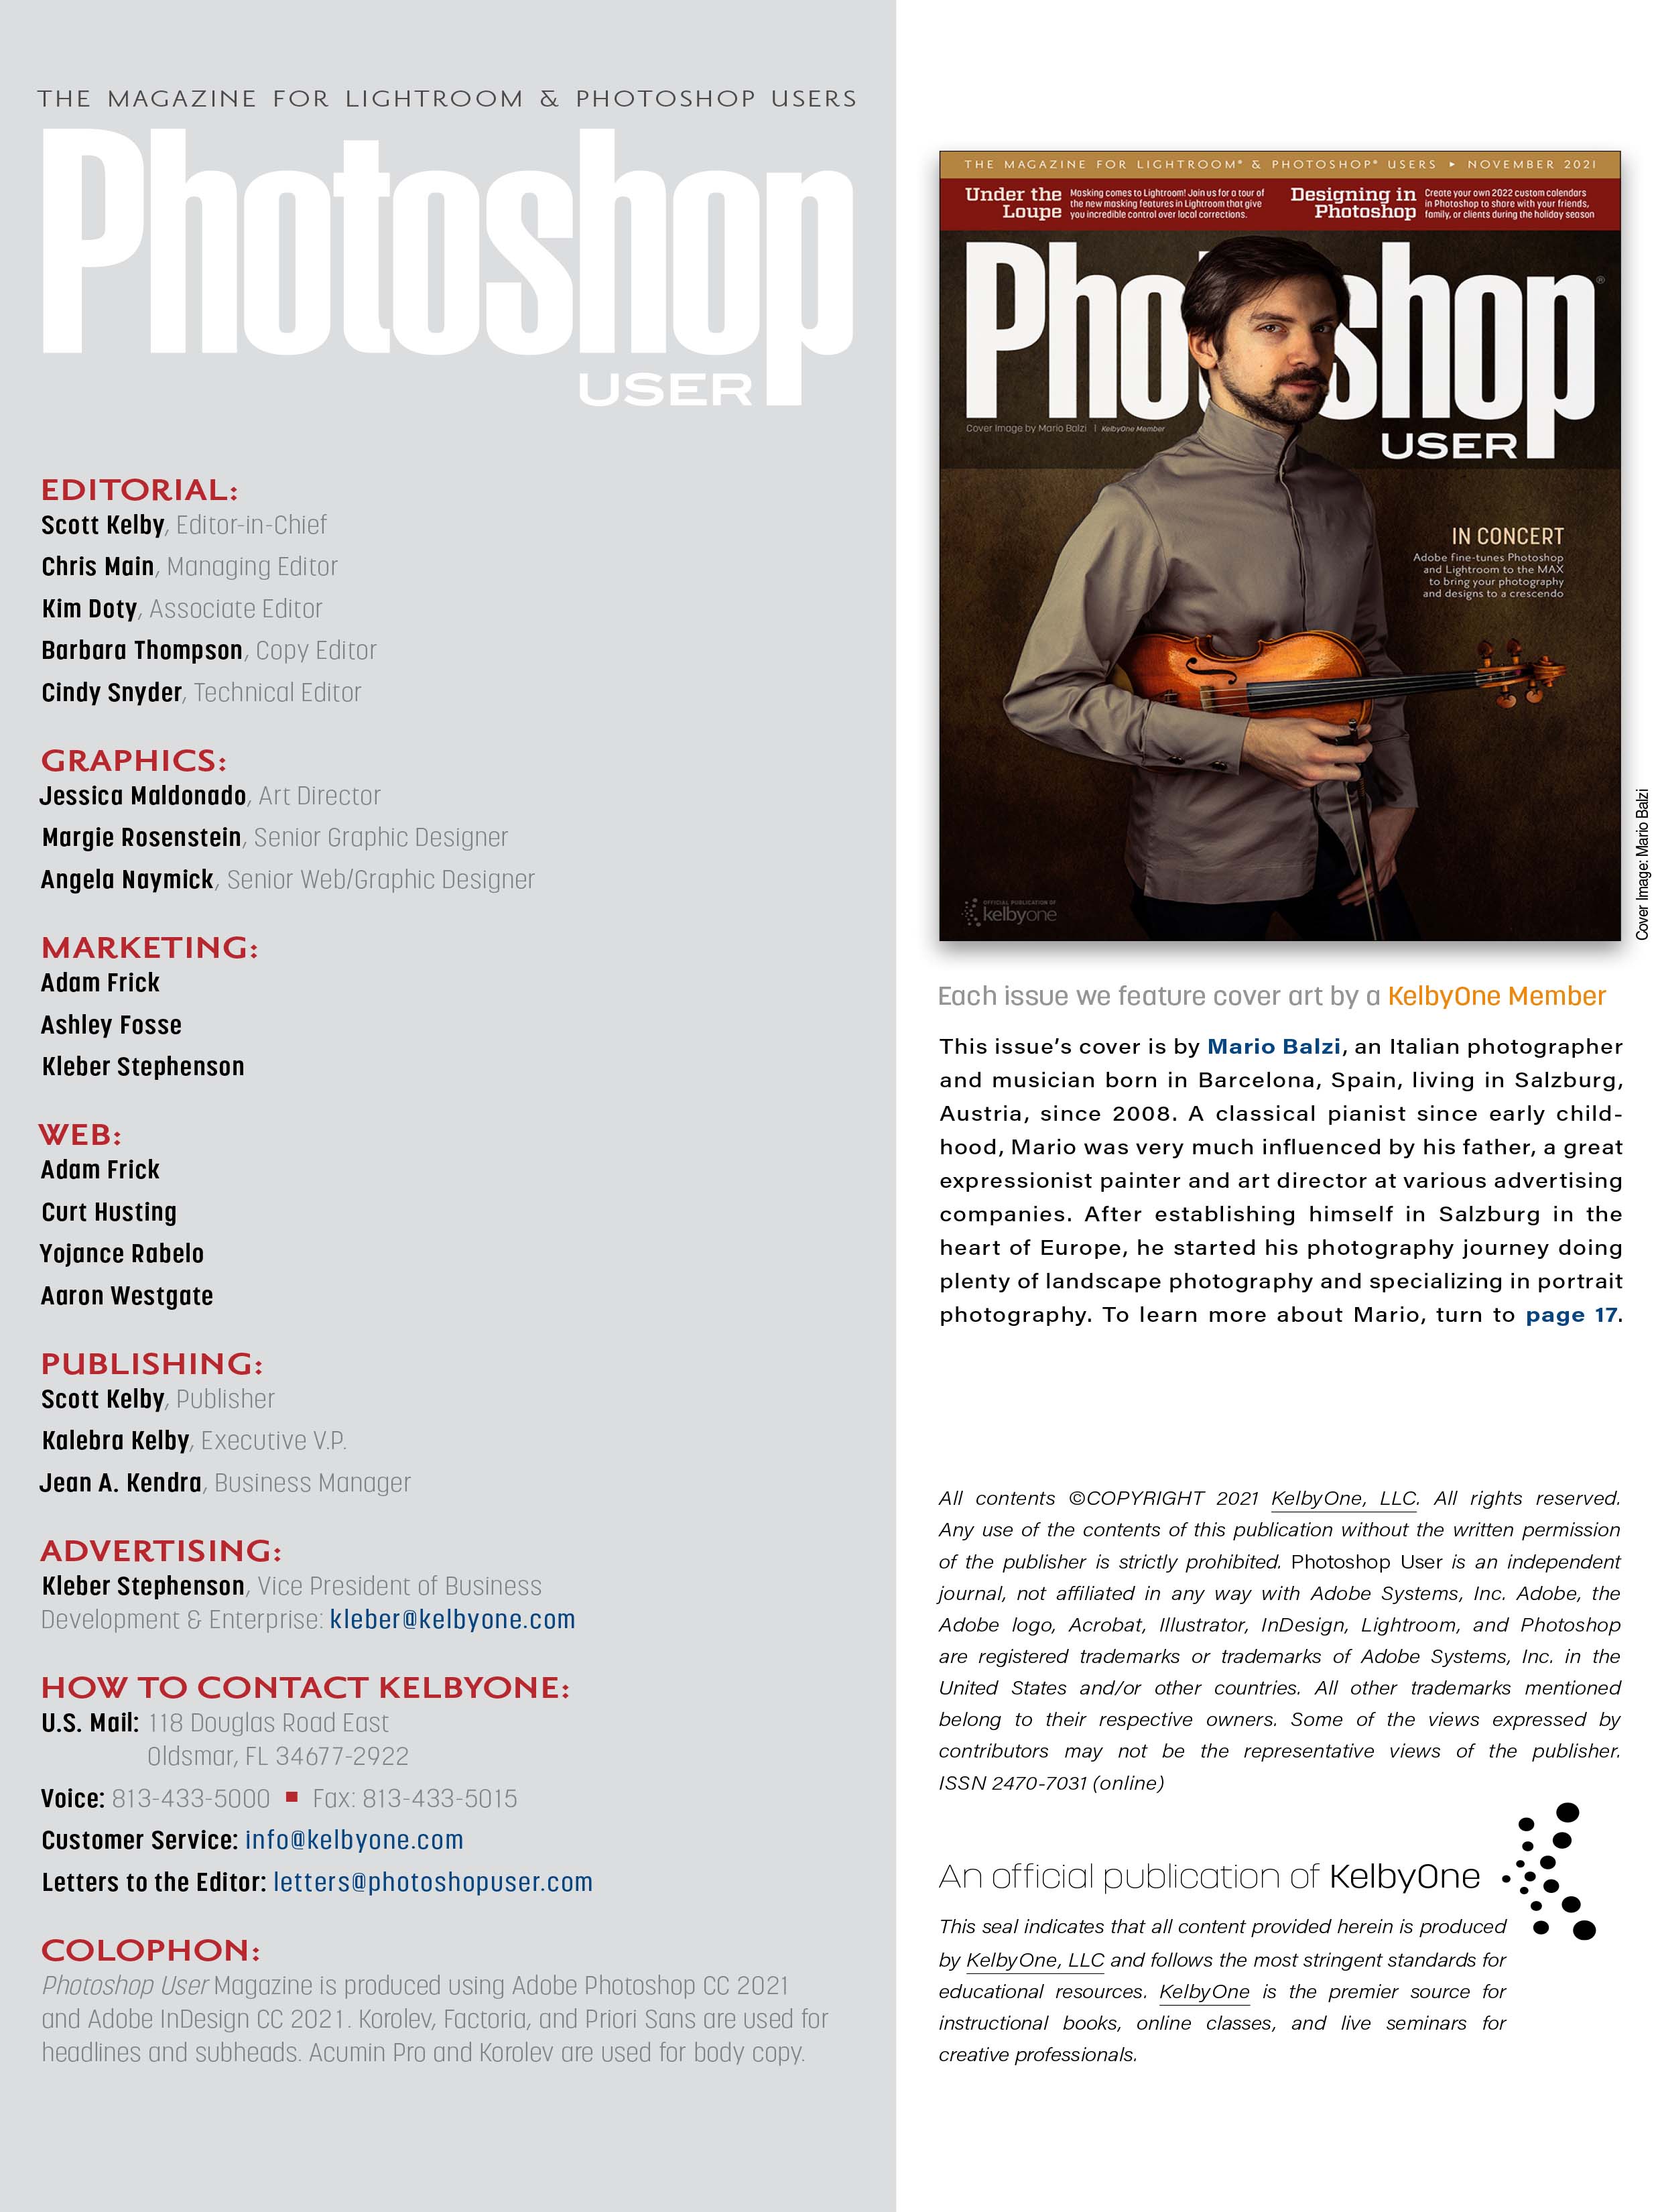 Photoshop User magazine